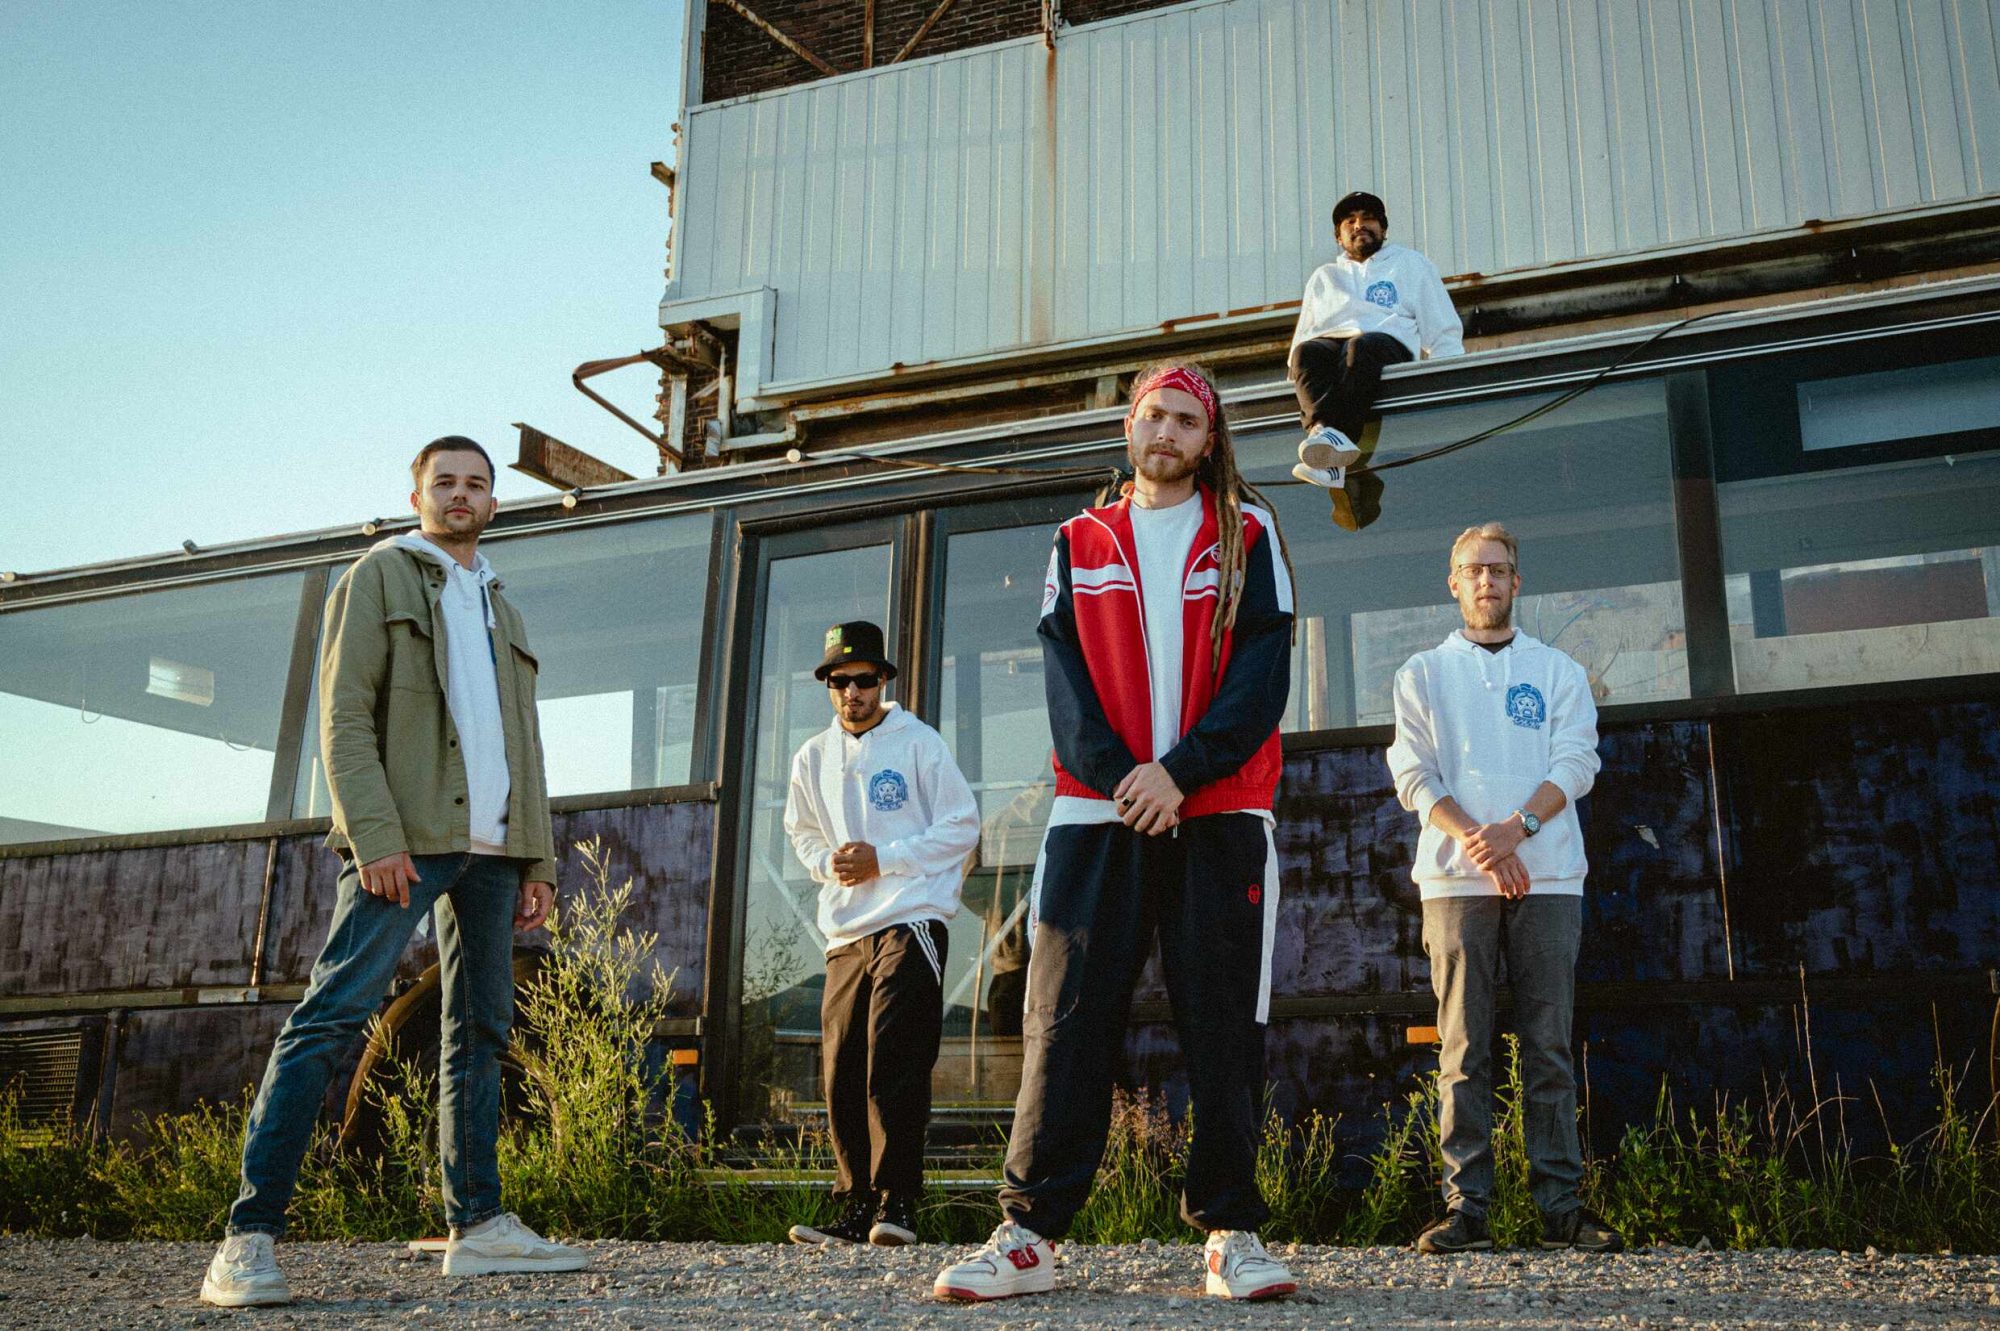 Jesse & The Flying Dutchmen - Hip Hop band from Breda, The Netherlands band trap, hip hop, rap, r&b band